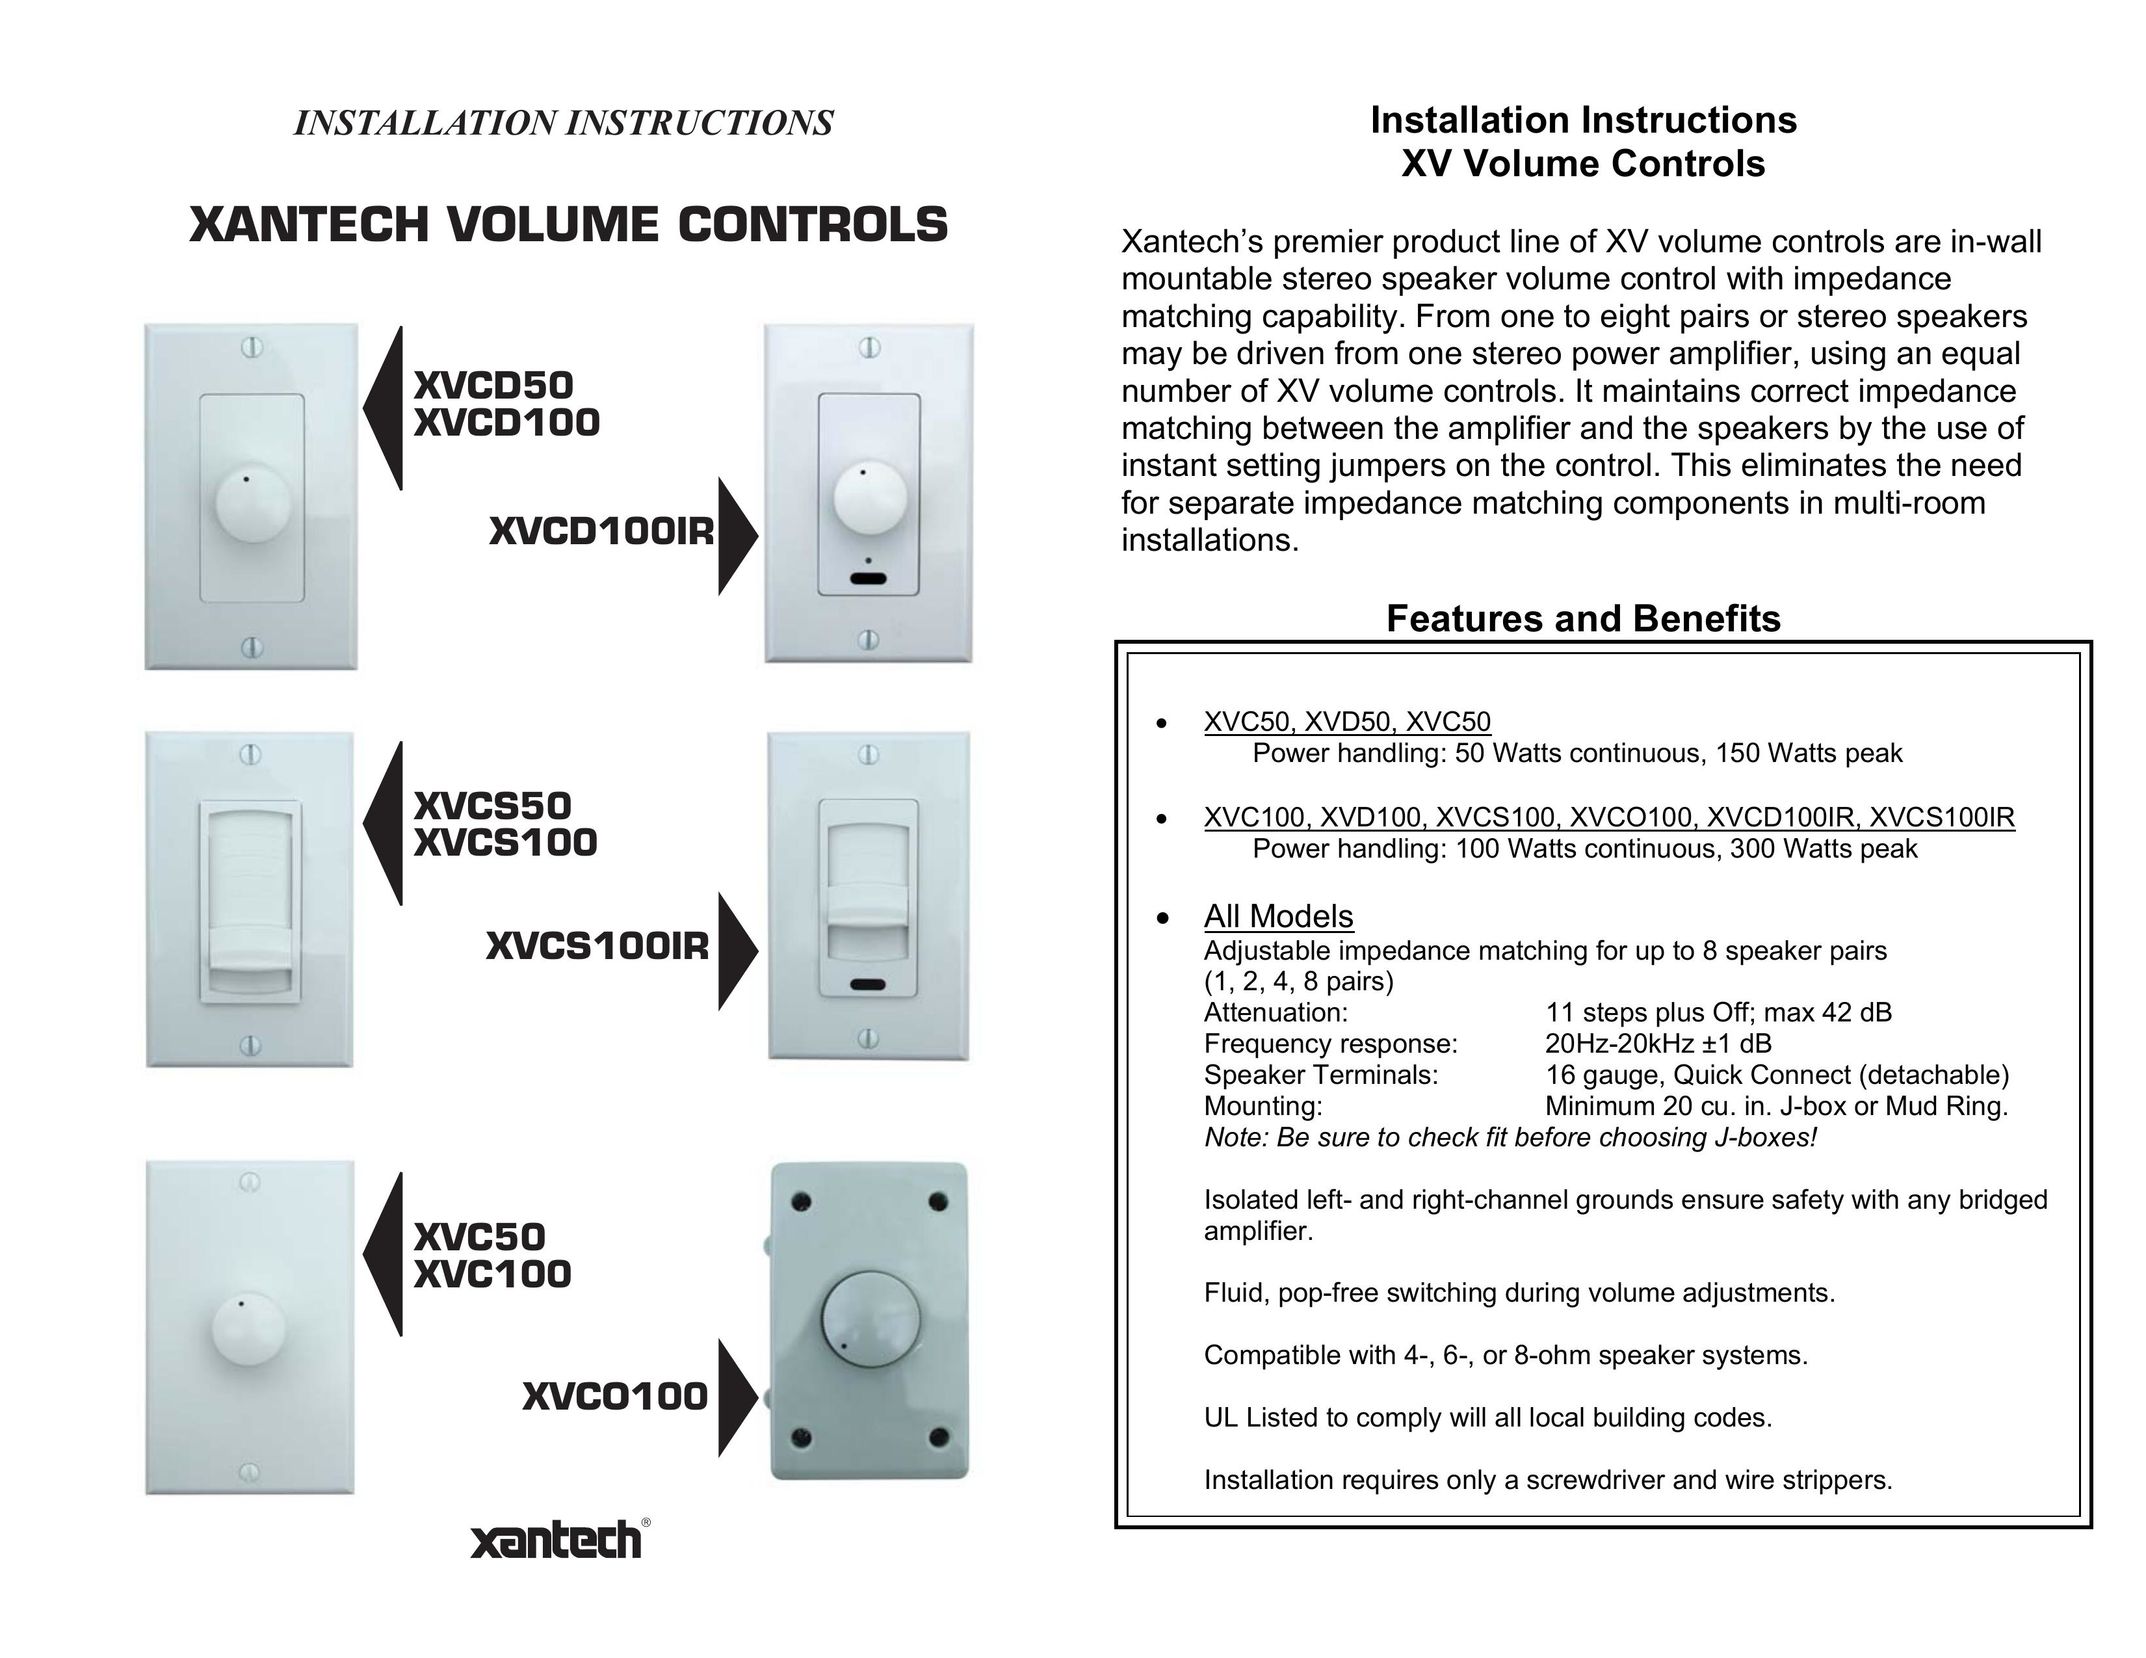 Xantech XVCD50 Switch User Manual